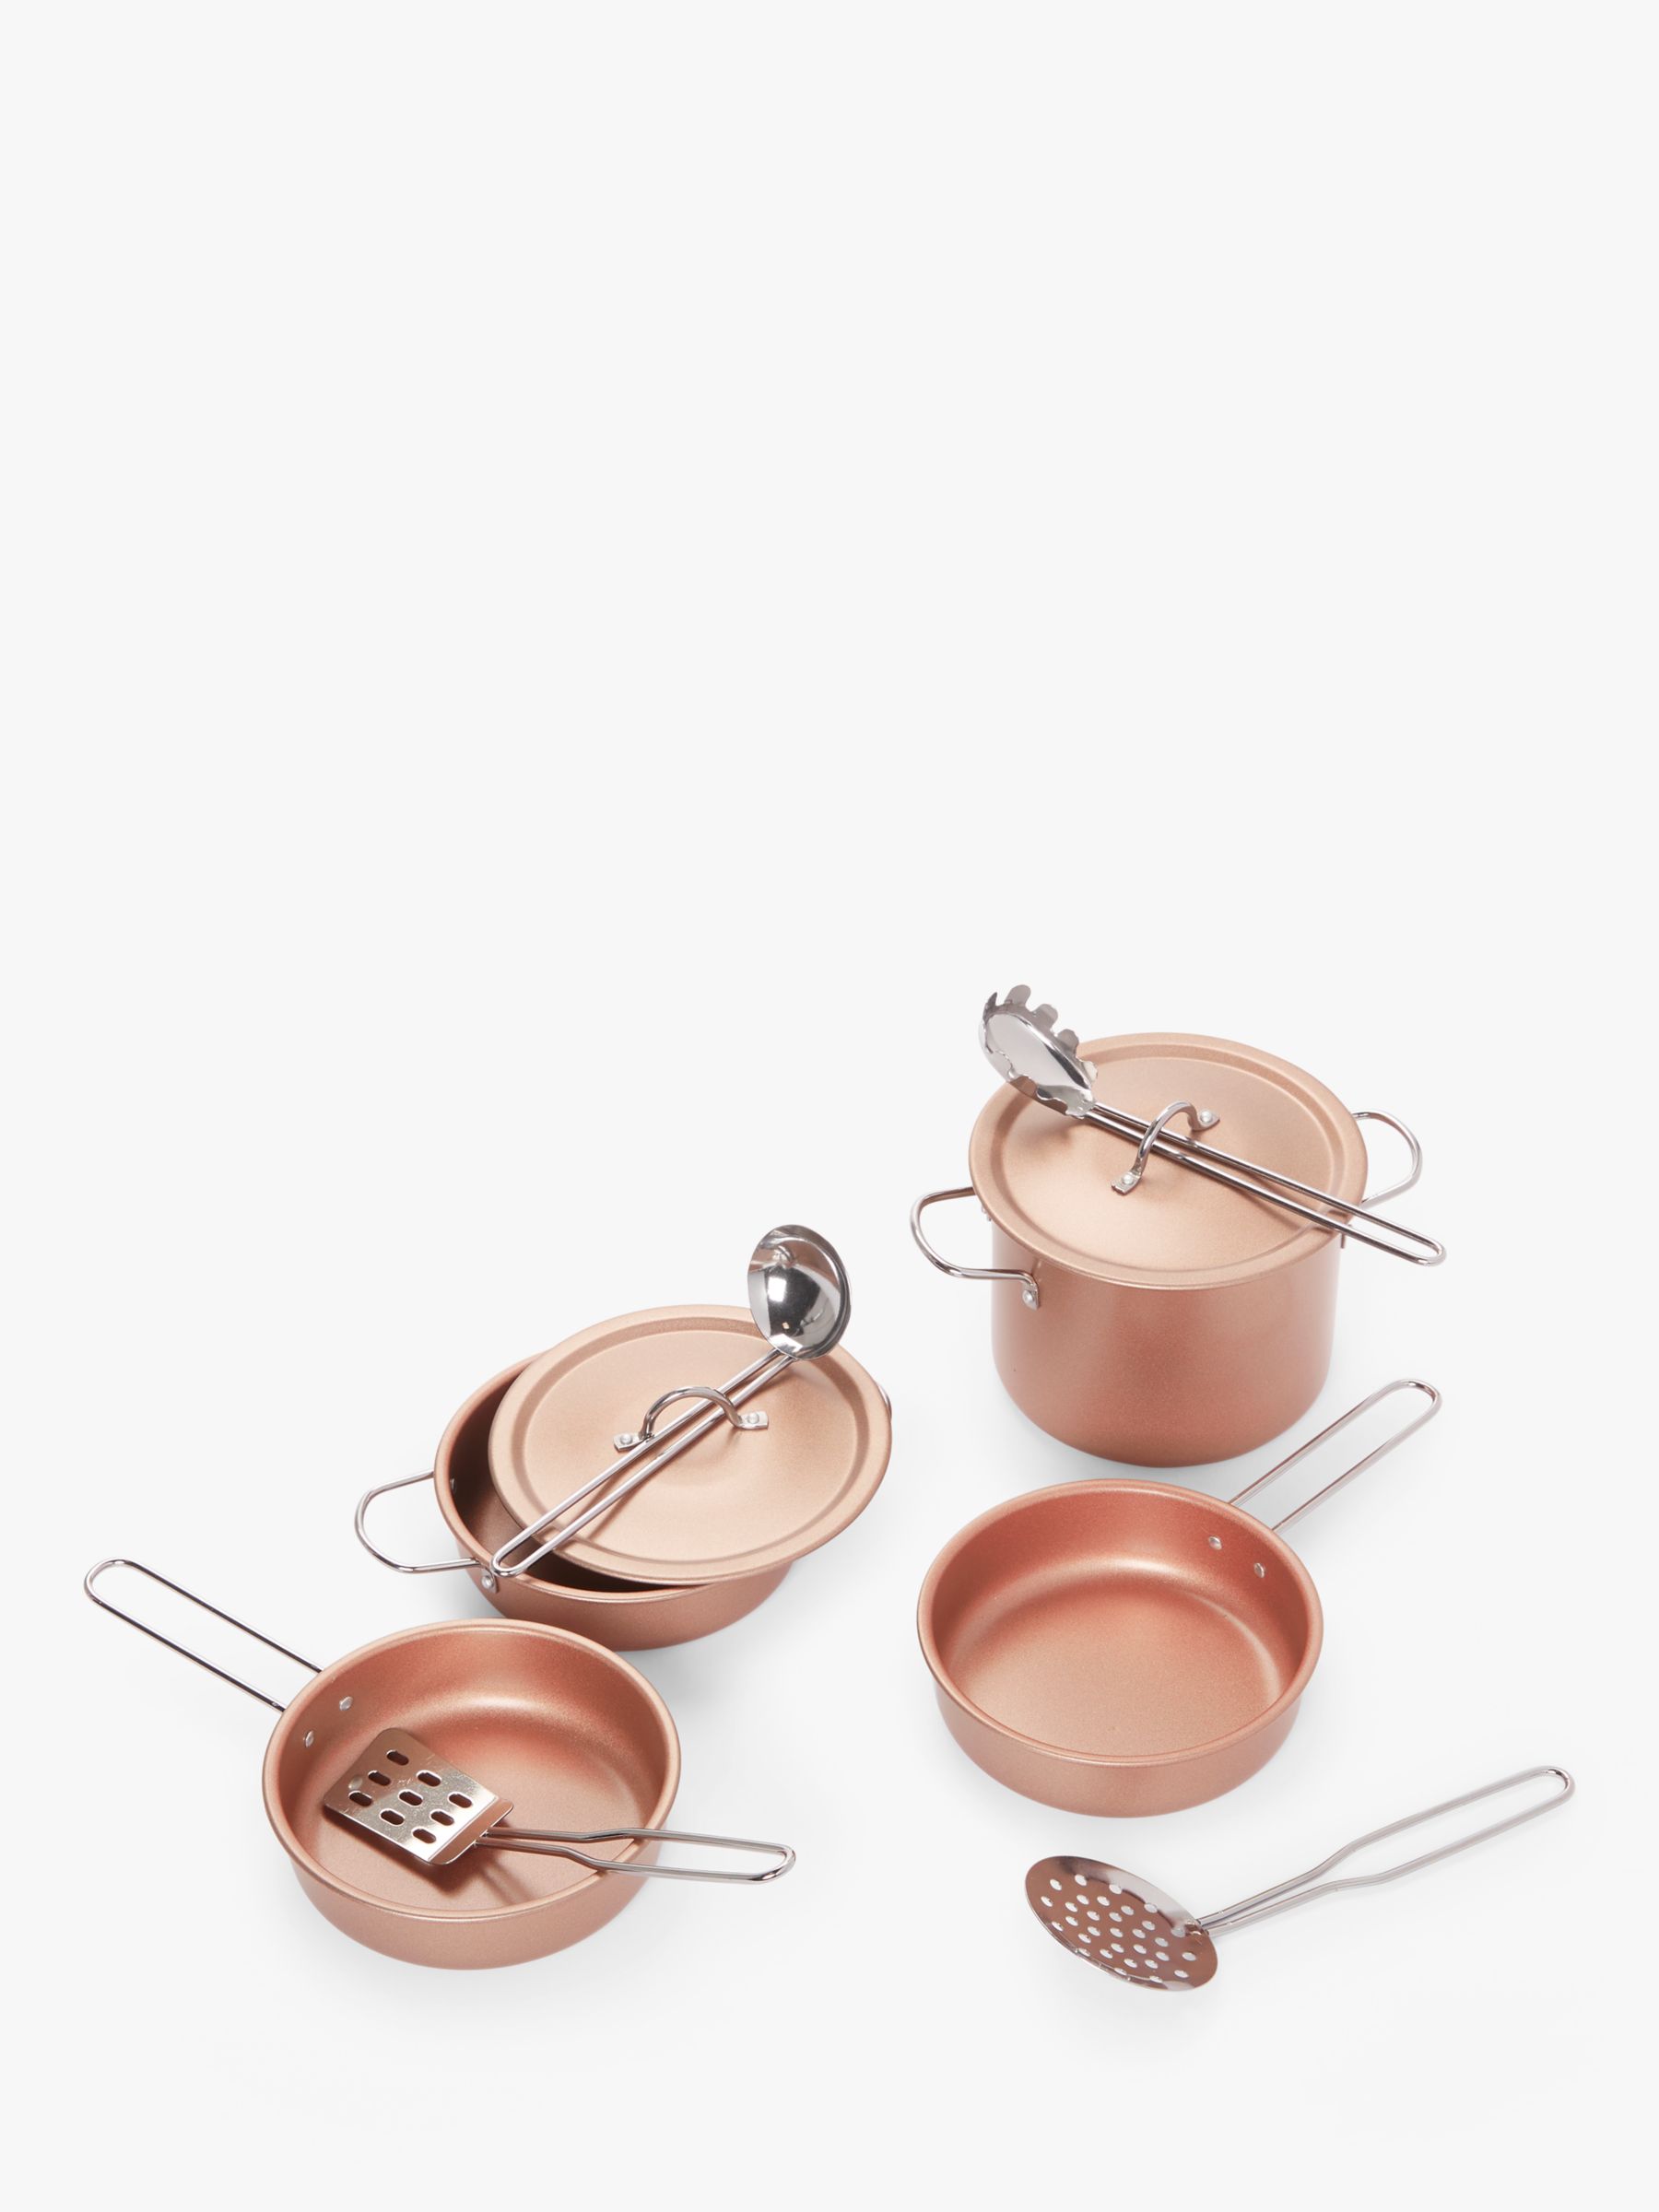 toy pots and pans set metal